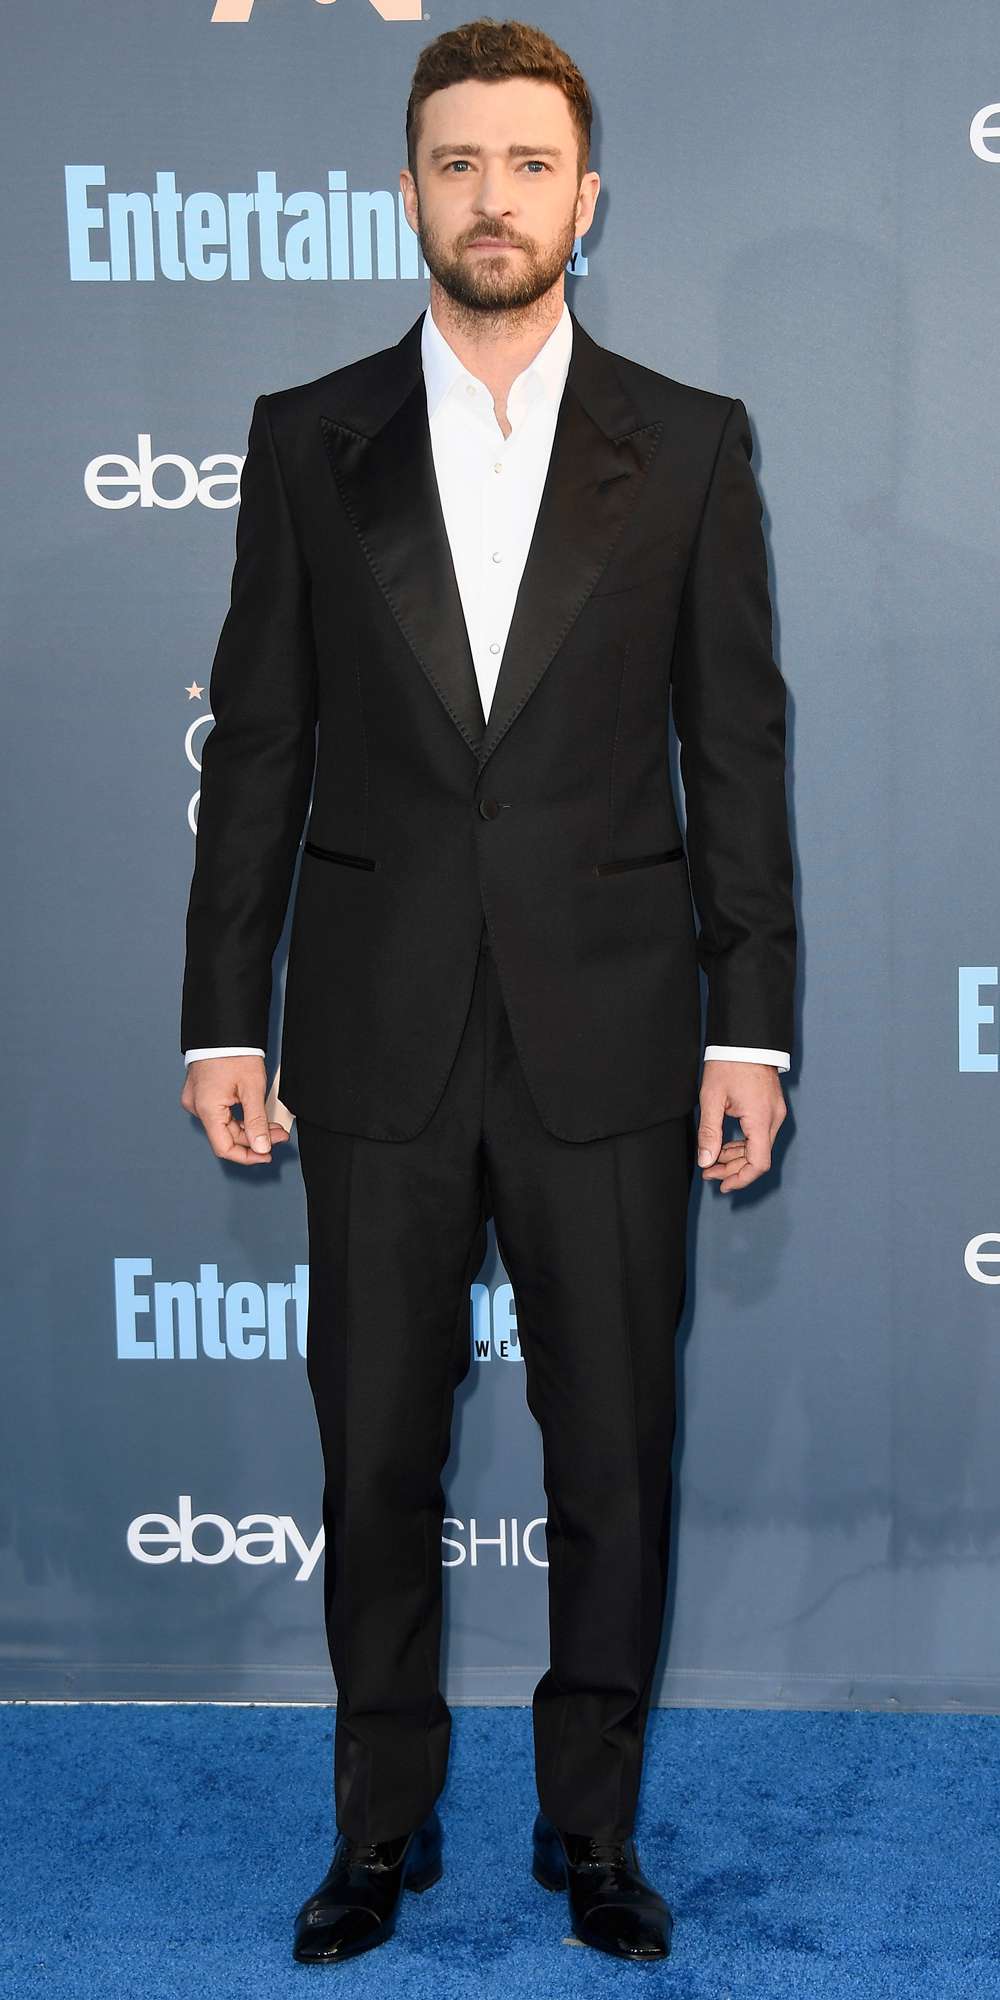 Actor Justin Timberlake attends The 22nd Annual Critics' Choice Awards at Barker Hangar on December 11, 2016 in Santa Monica, California.